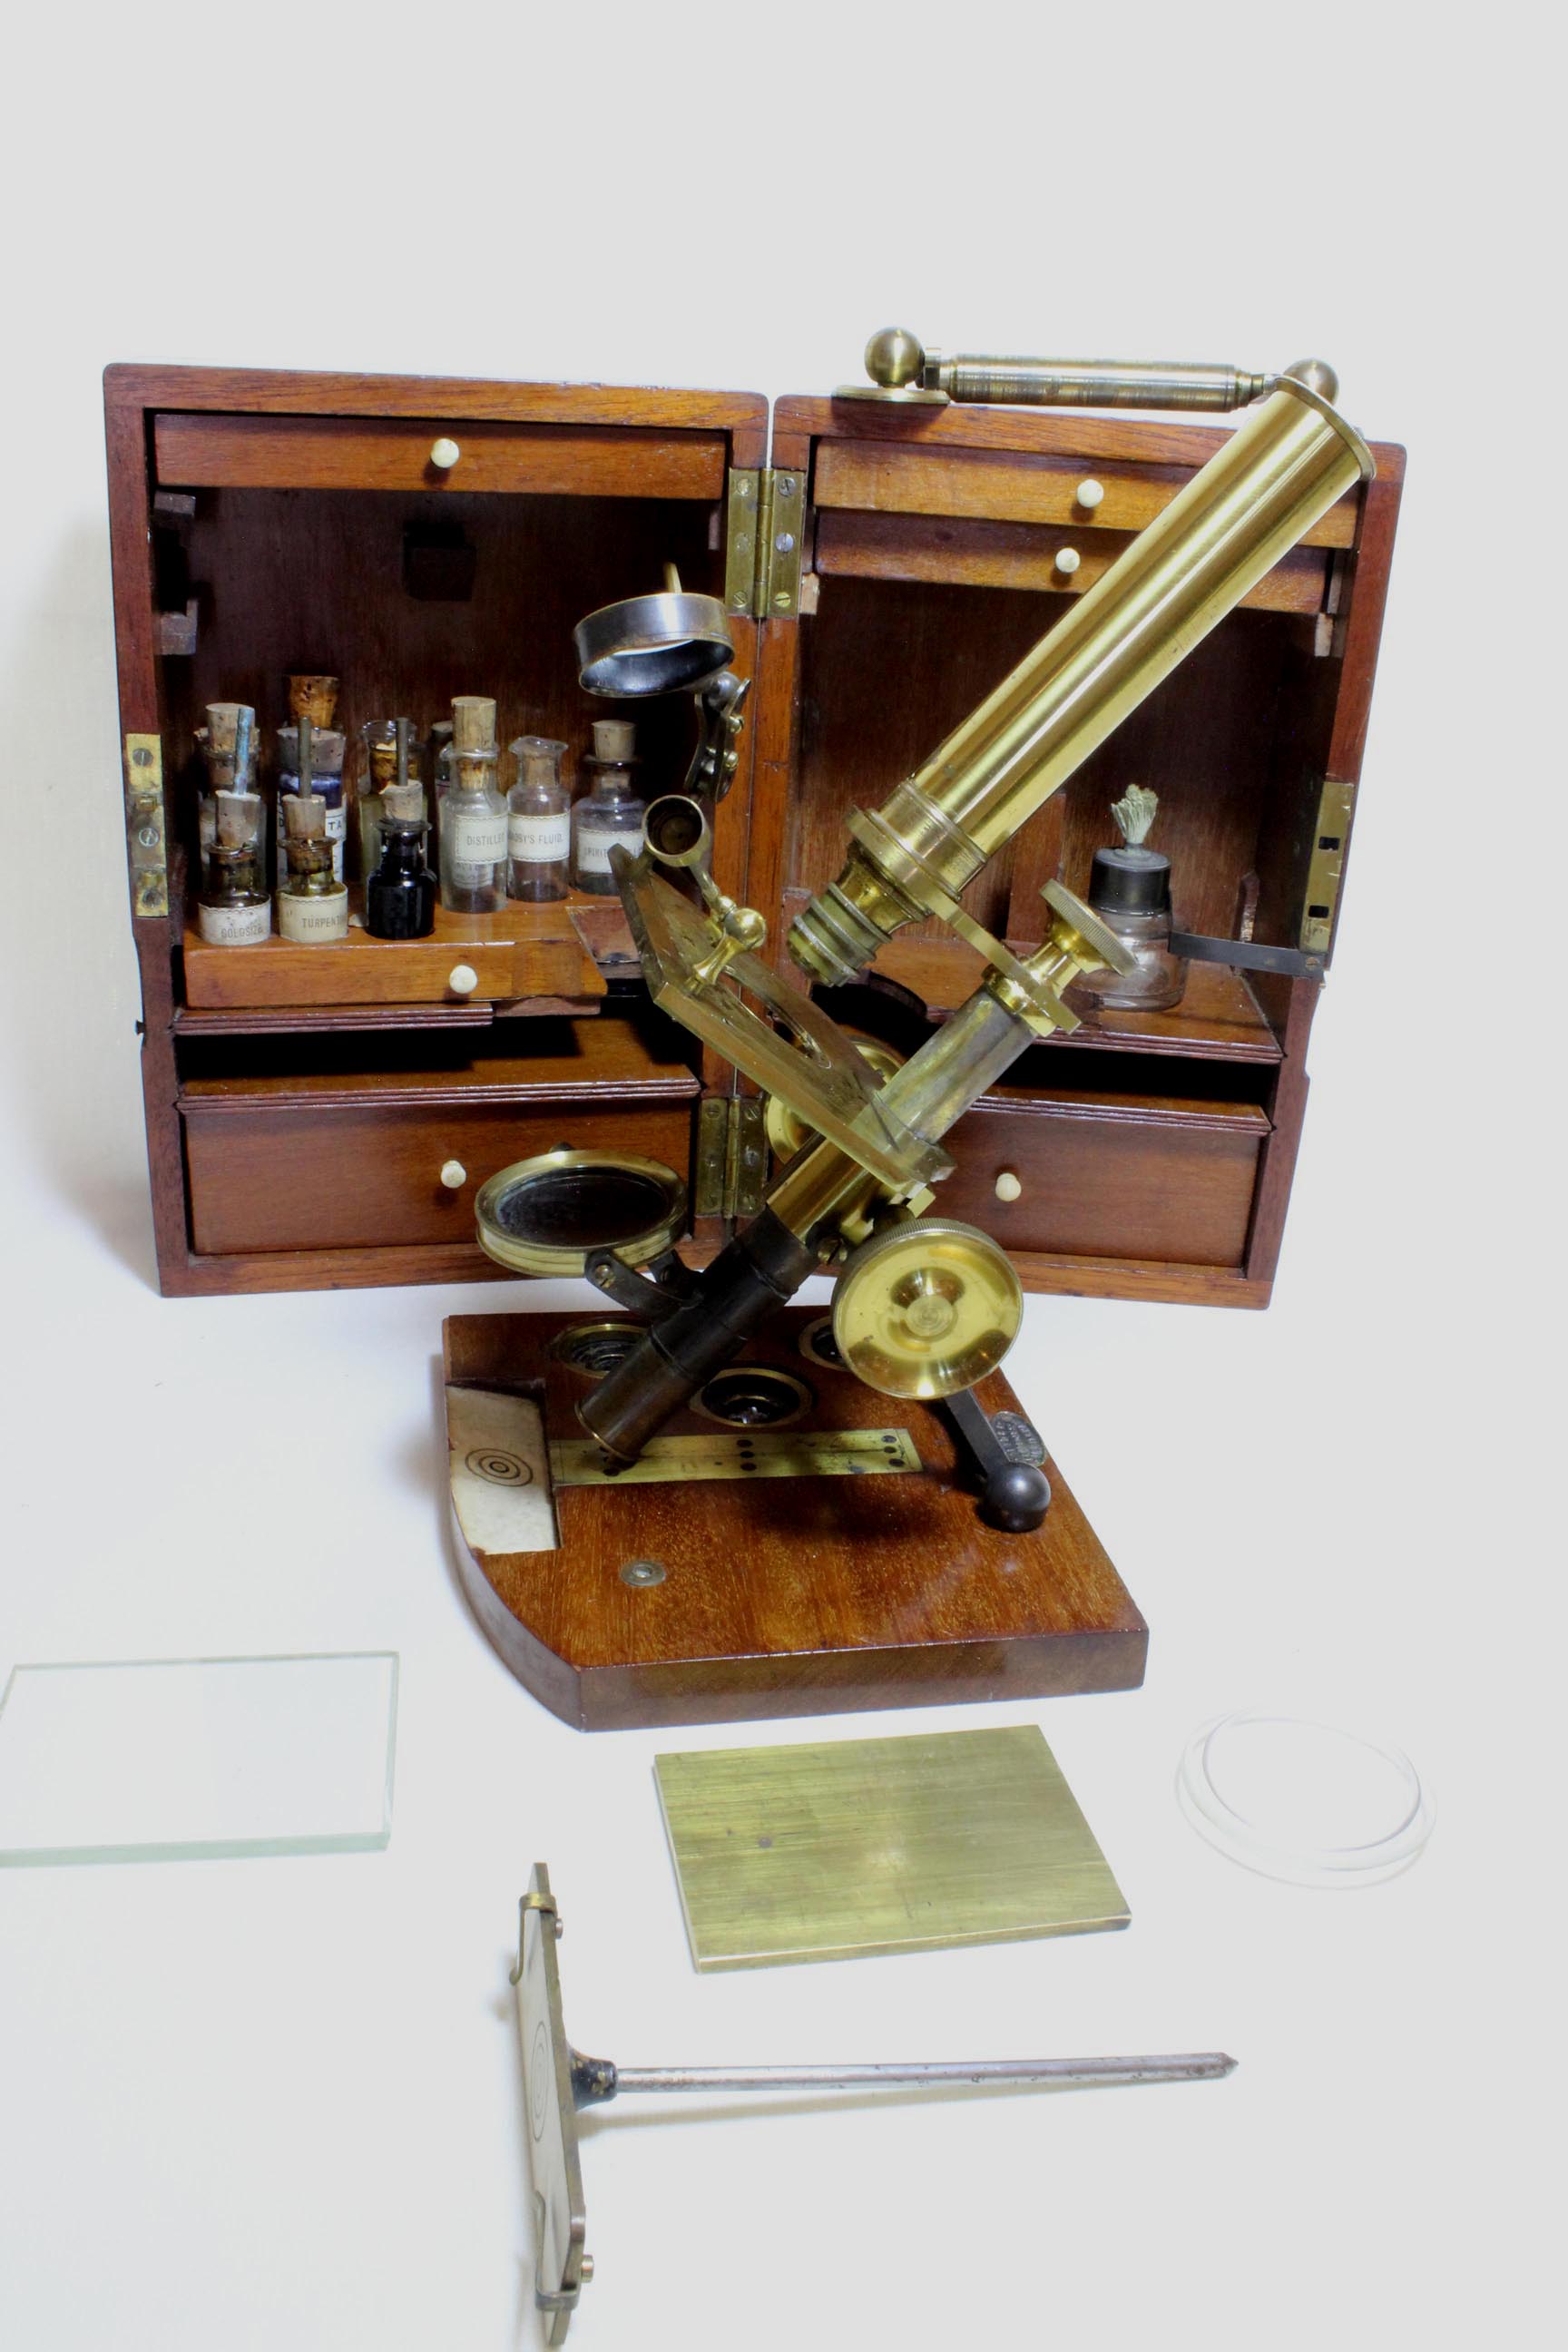 Marshall-Field microscope